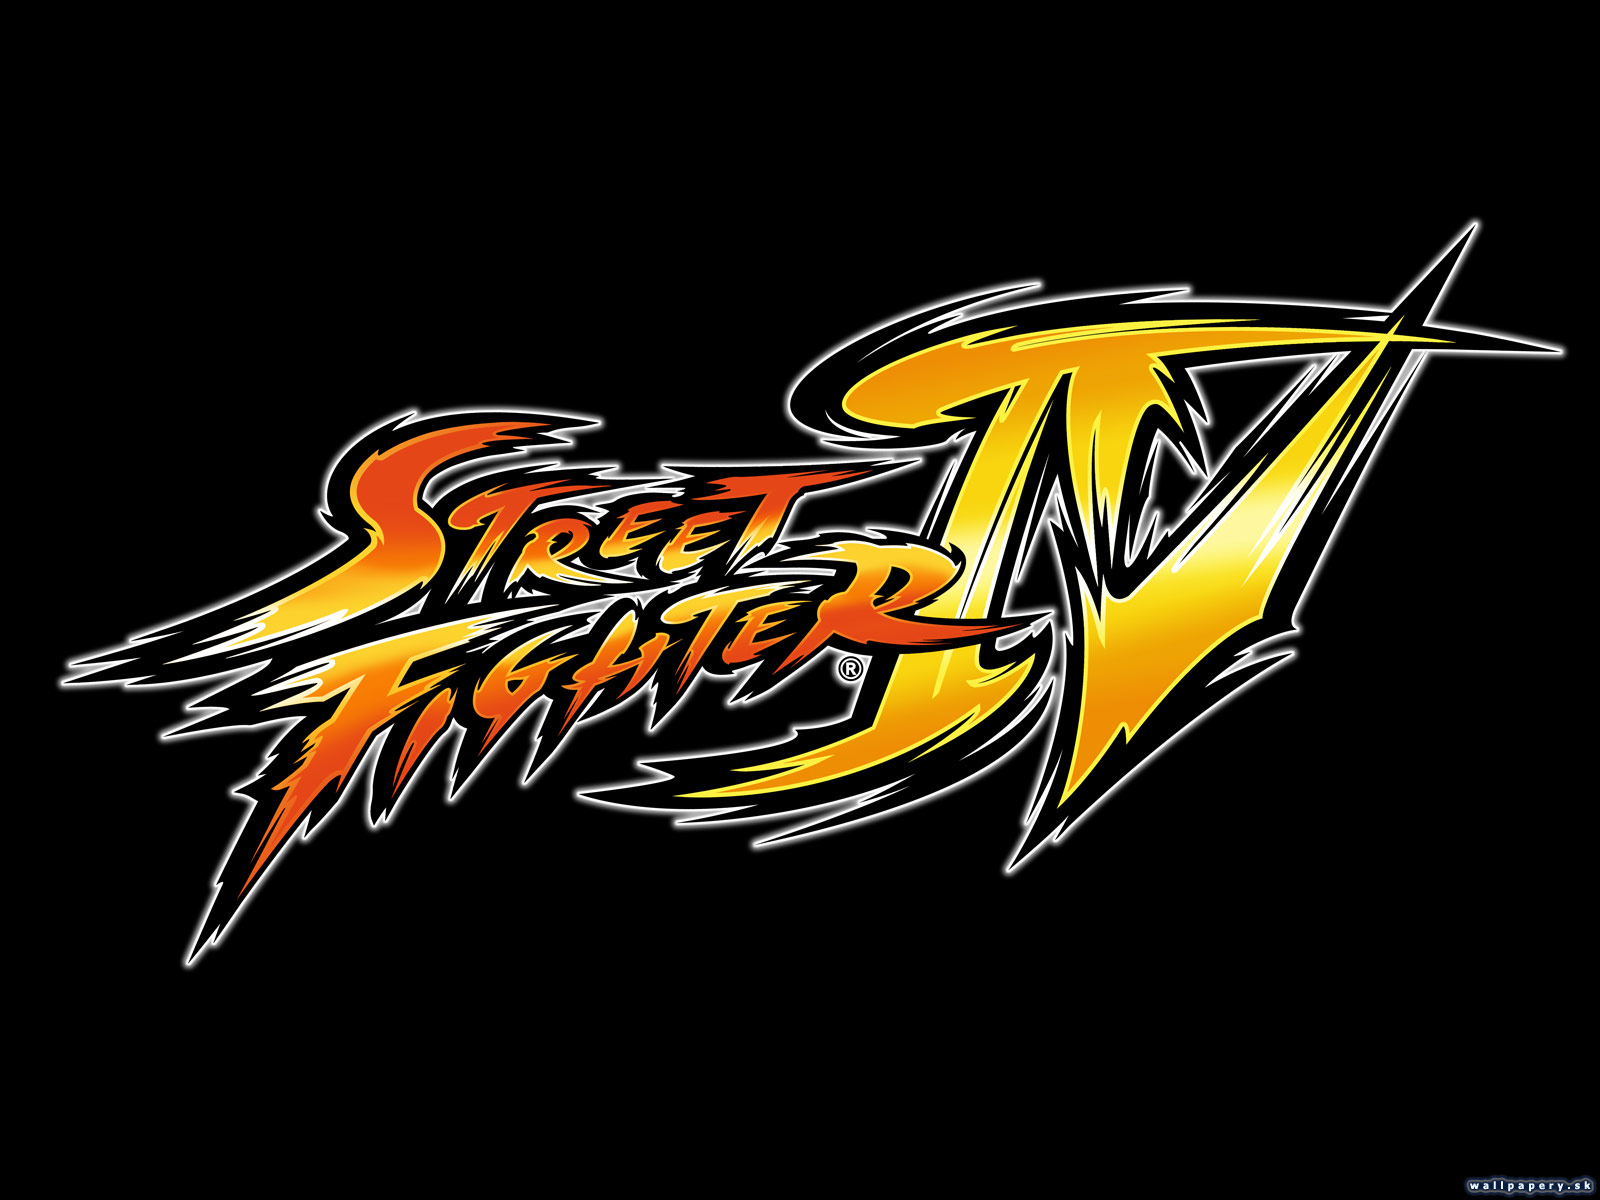 Street Fighter IV - wallpaper 7